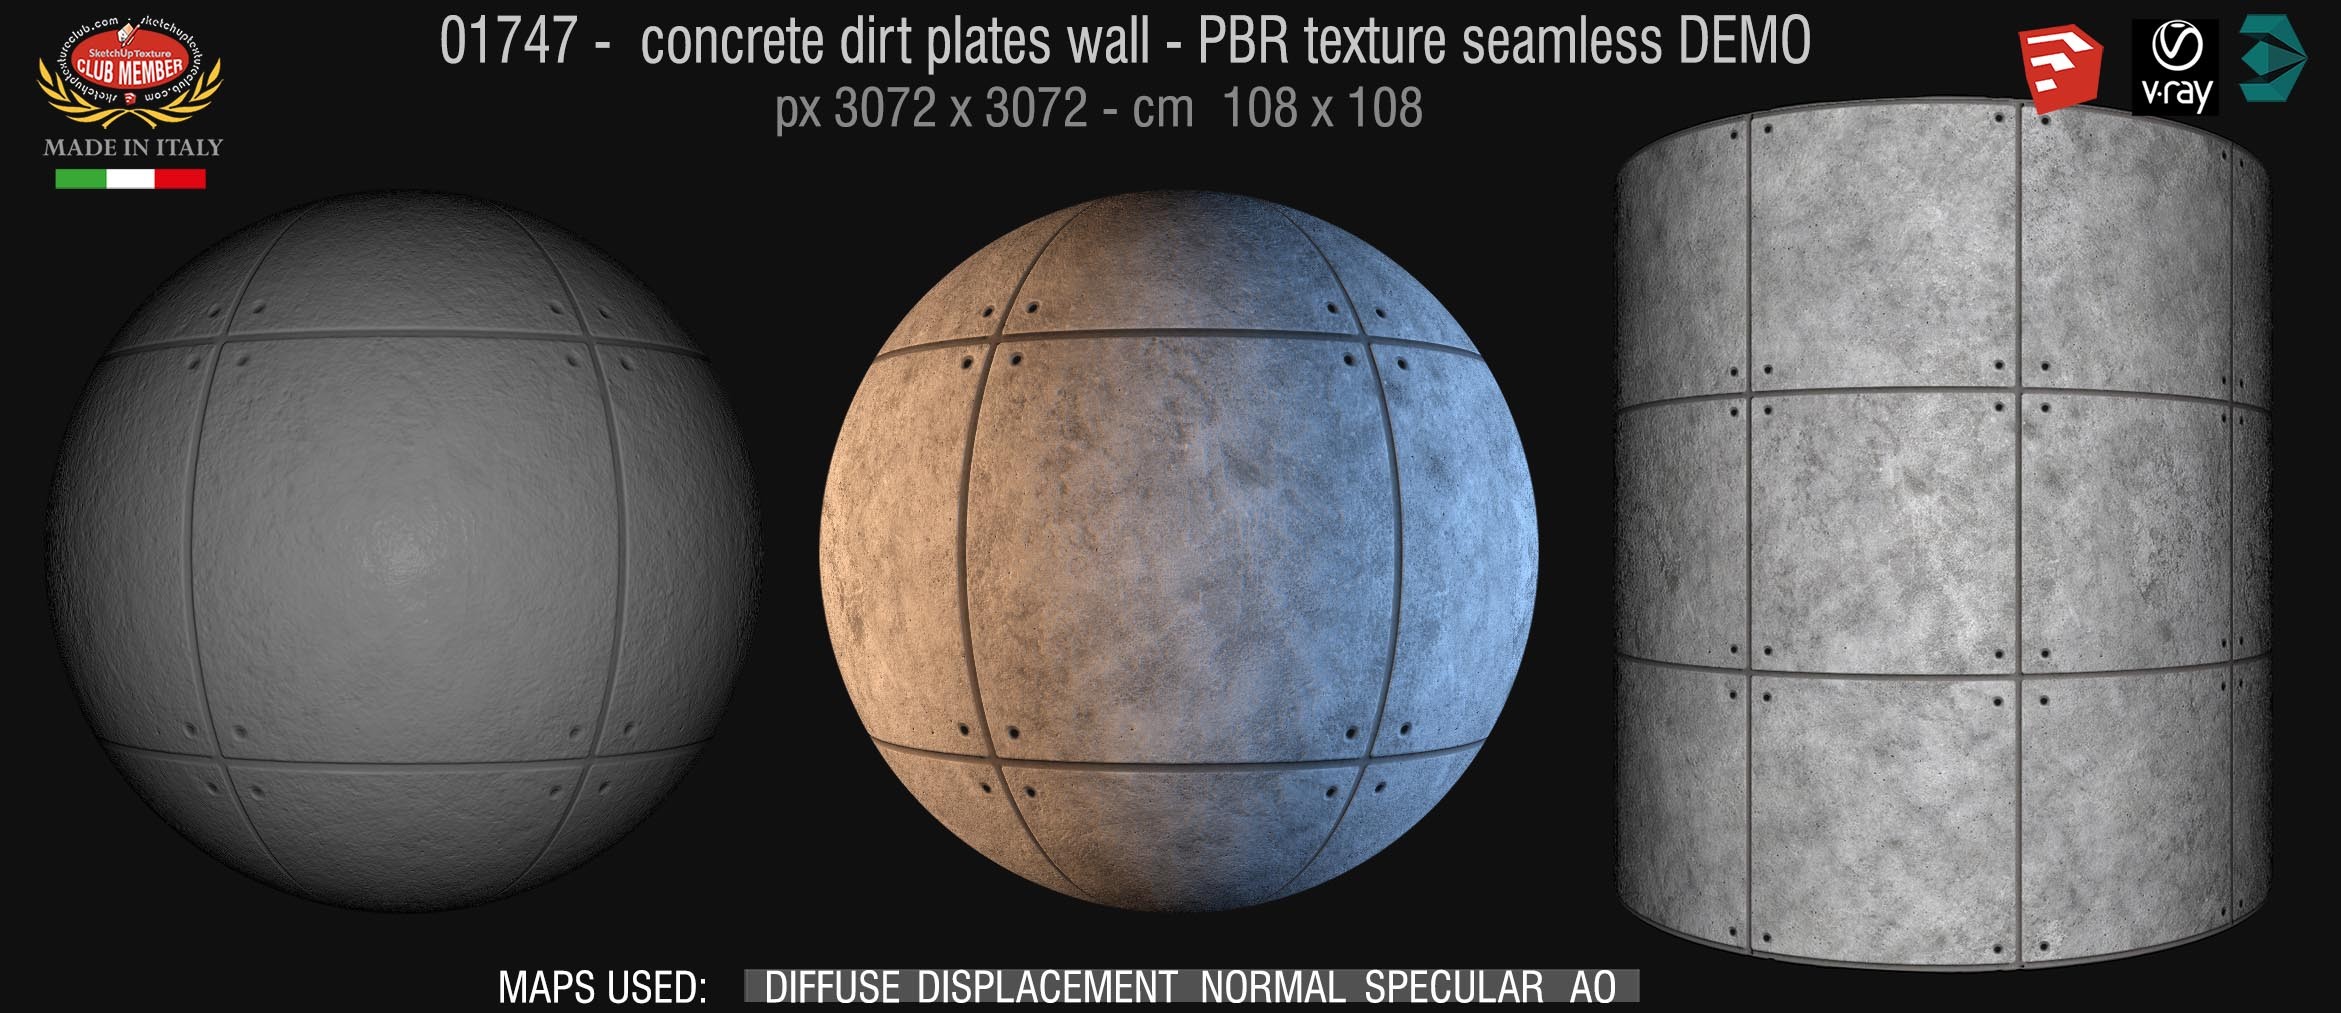 01747 concrete dirt plates wall PBR texture seamless DEMO